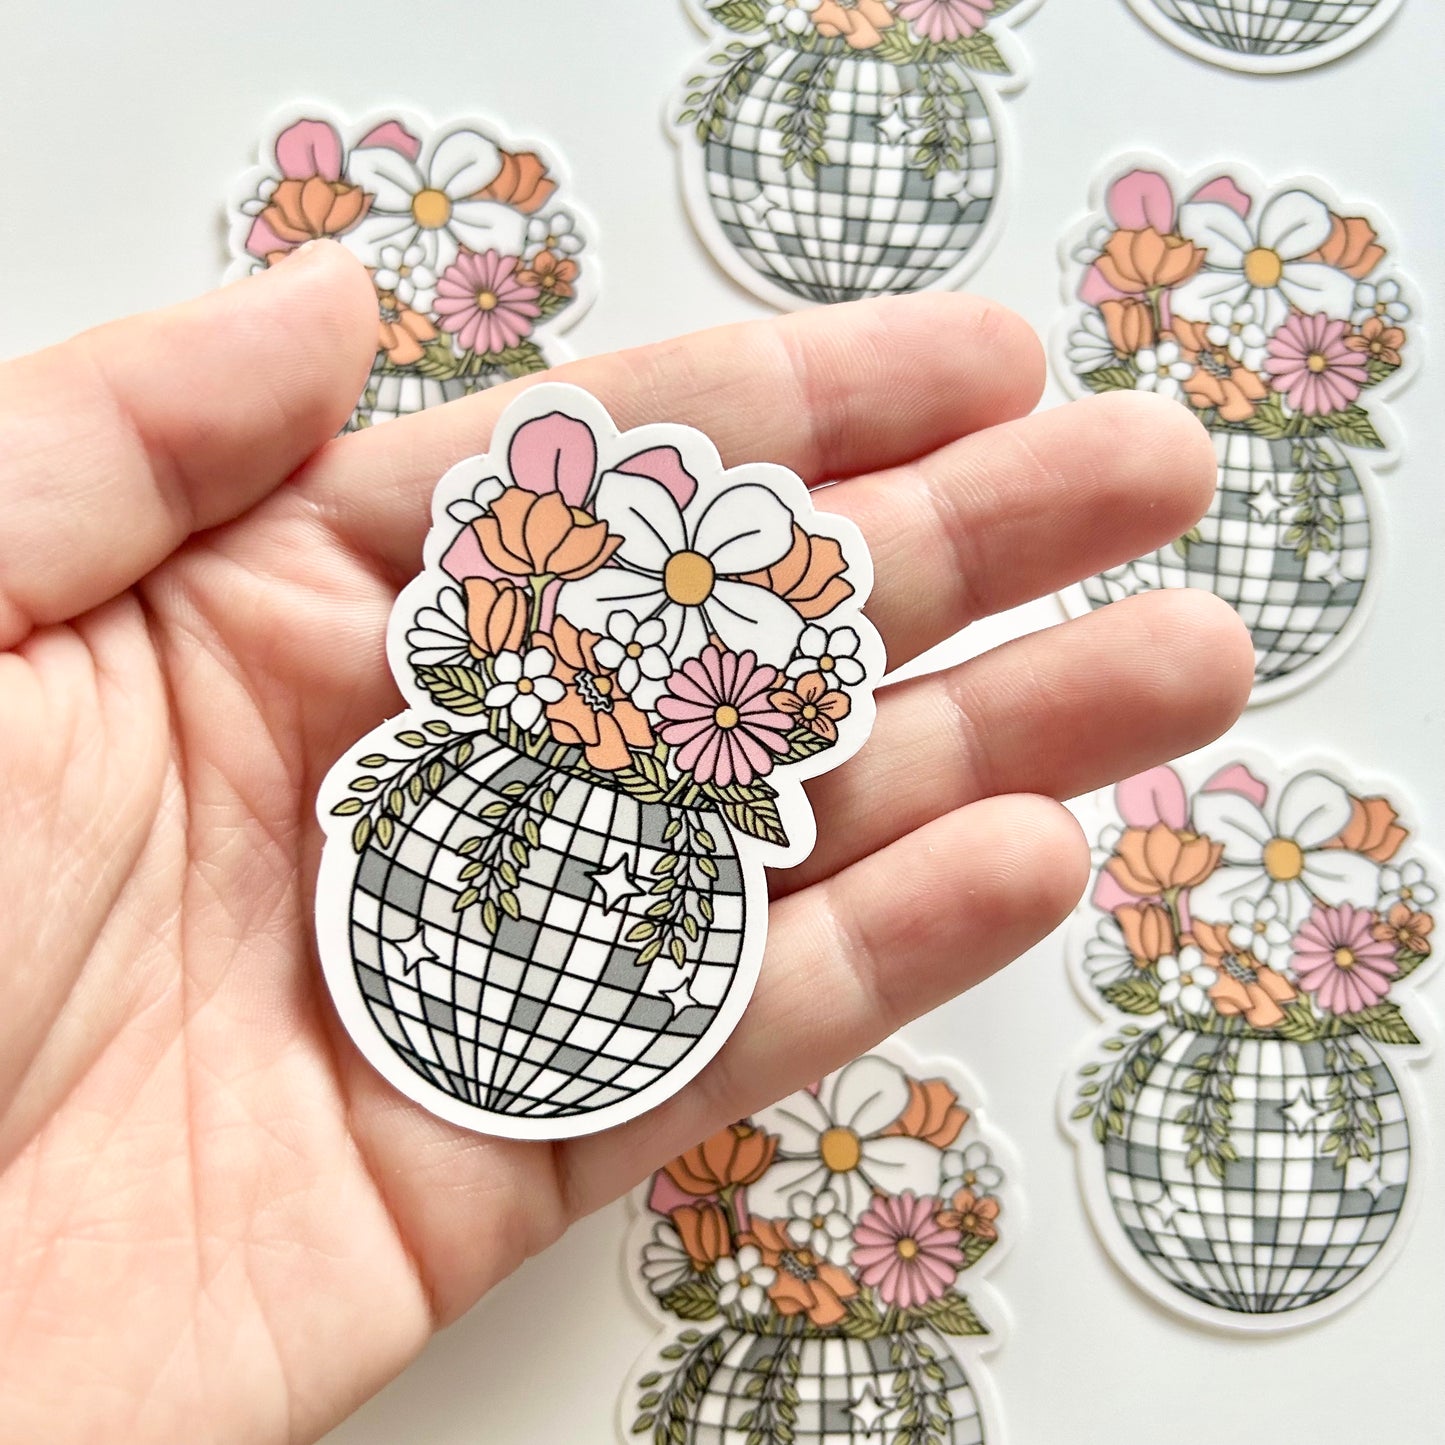 Disco Ball Flowers Sticker - Boho Floral Stickers